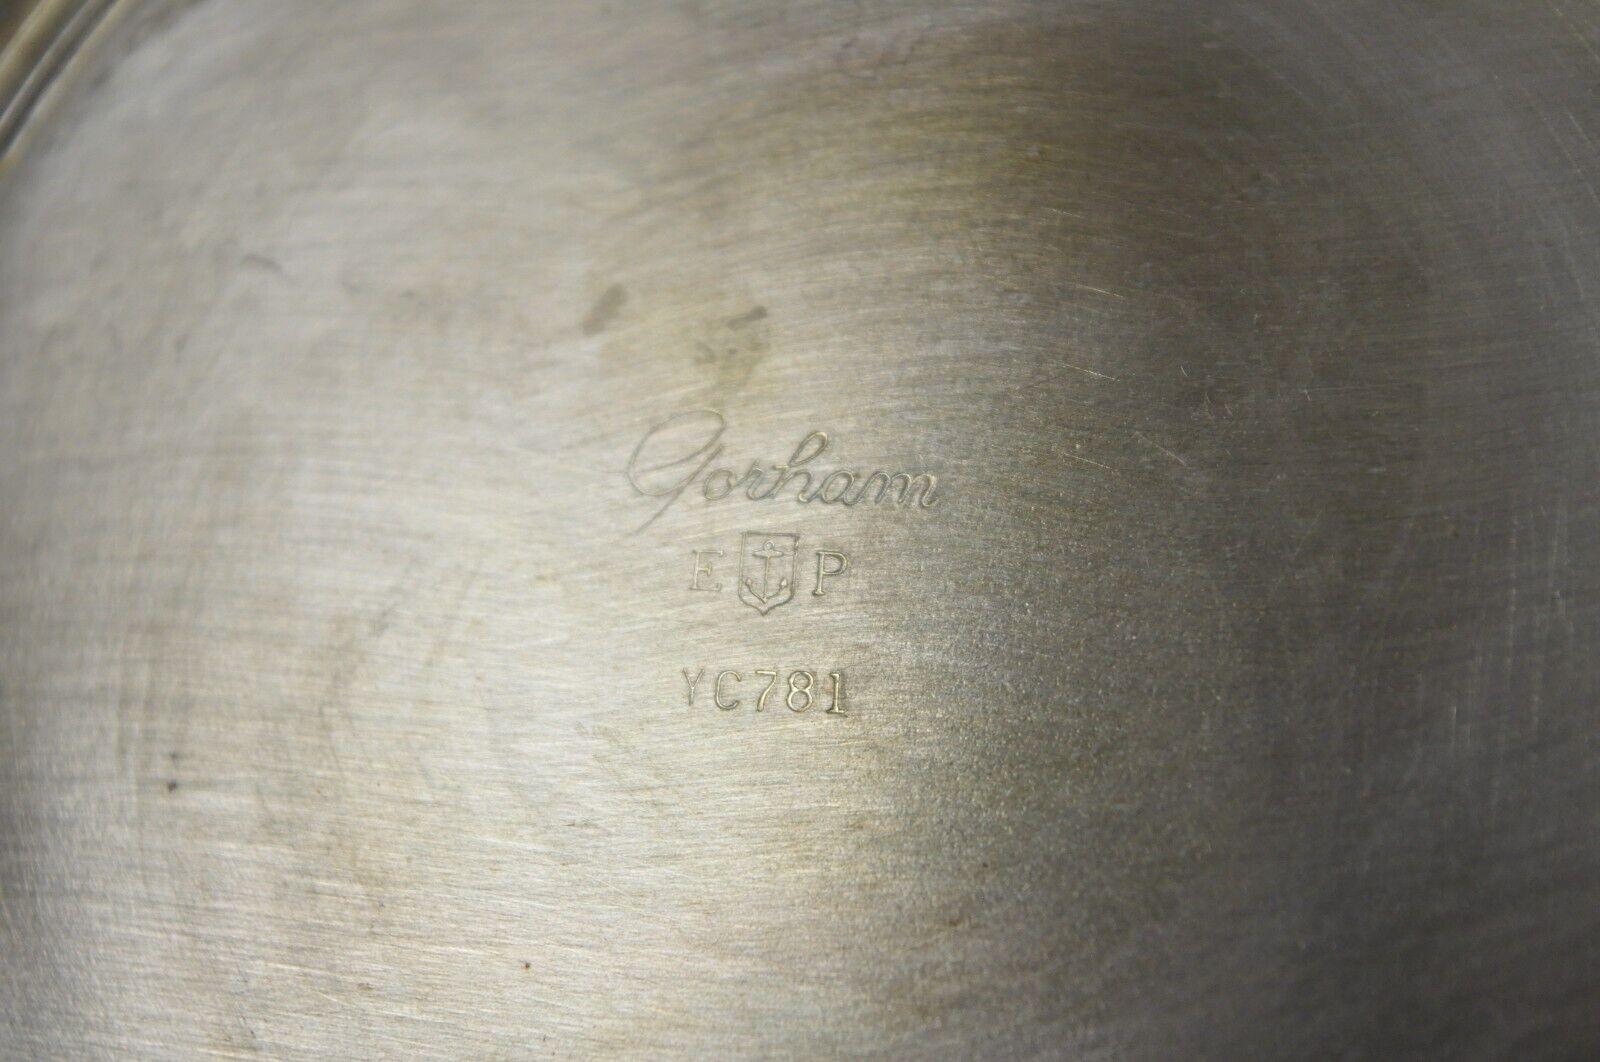 Gorham YC781 Azure Blue Enamel Silver Plated Round Modern Serving Bowl For Sale 1